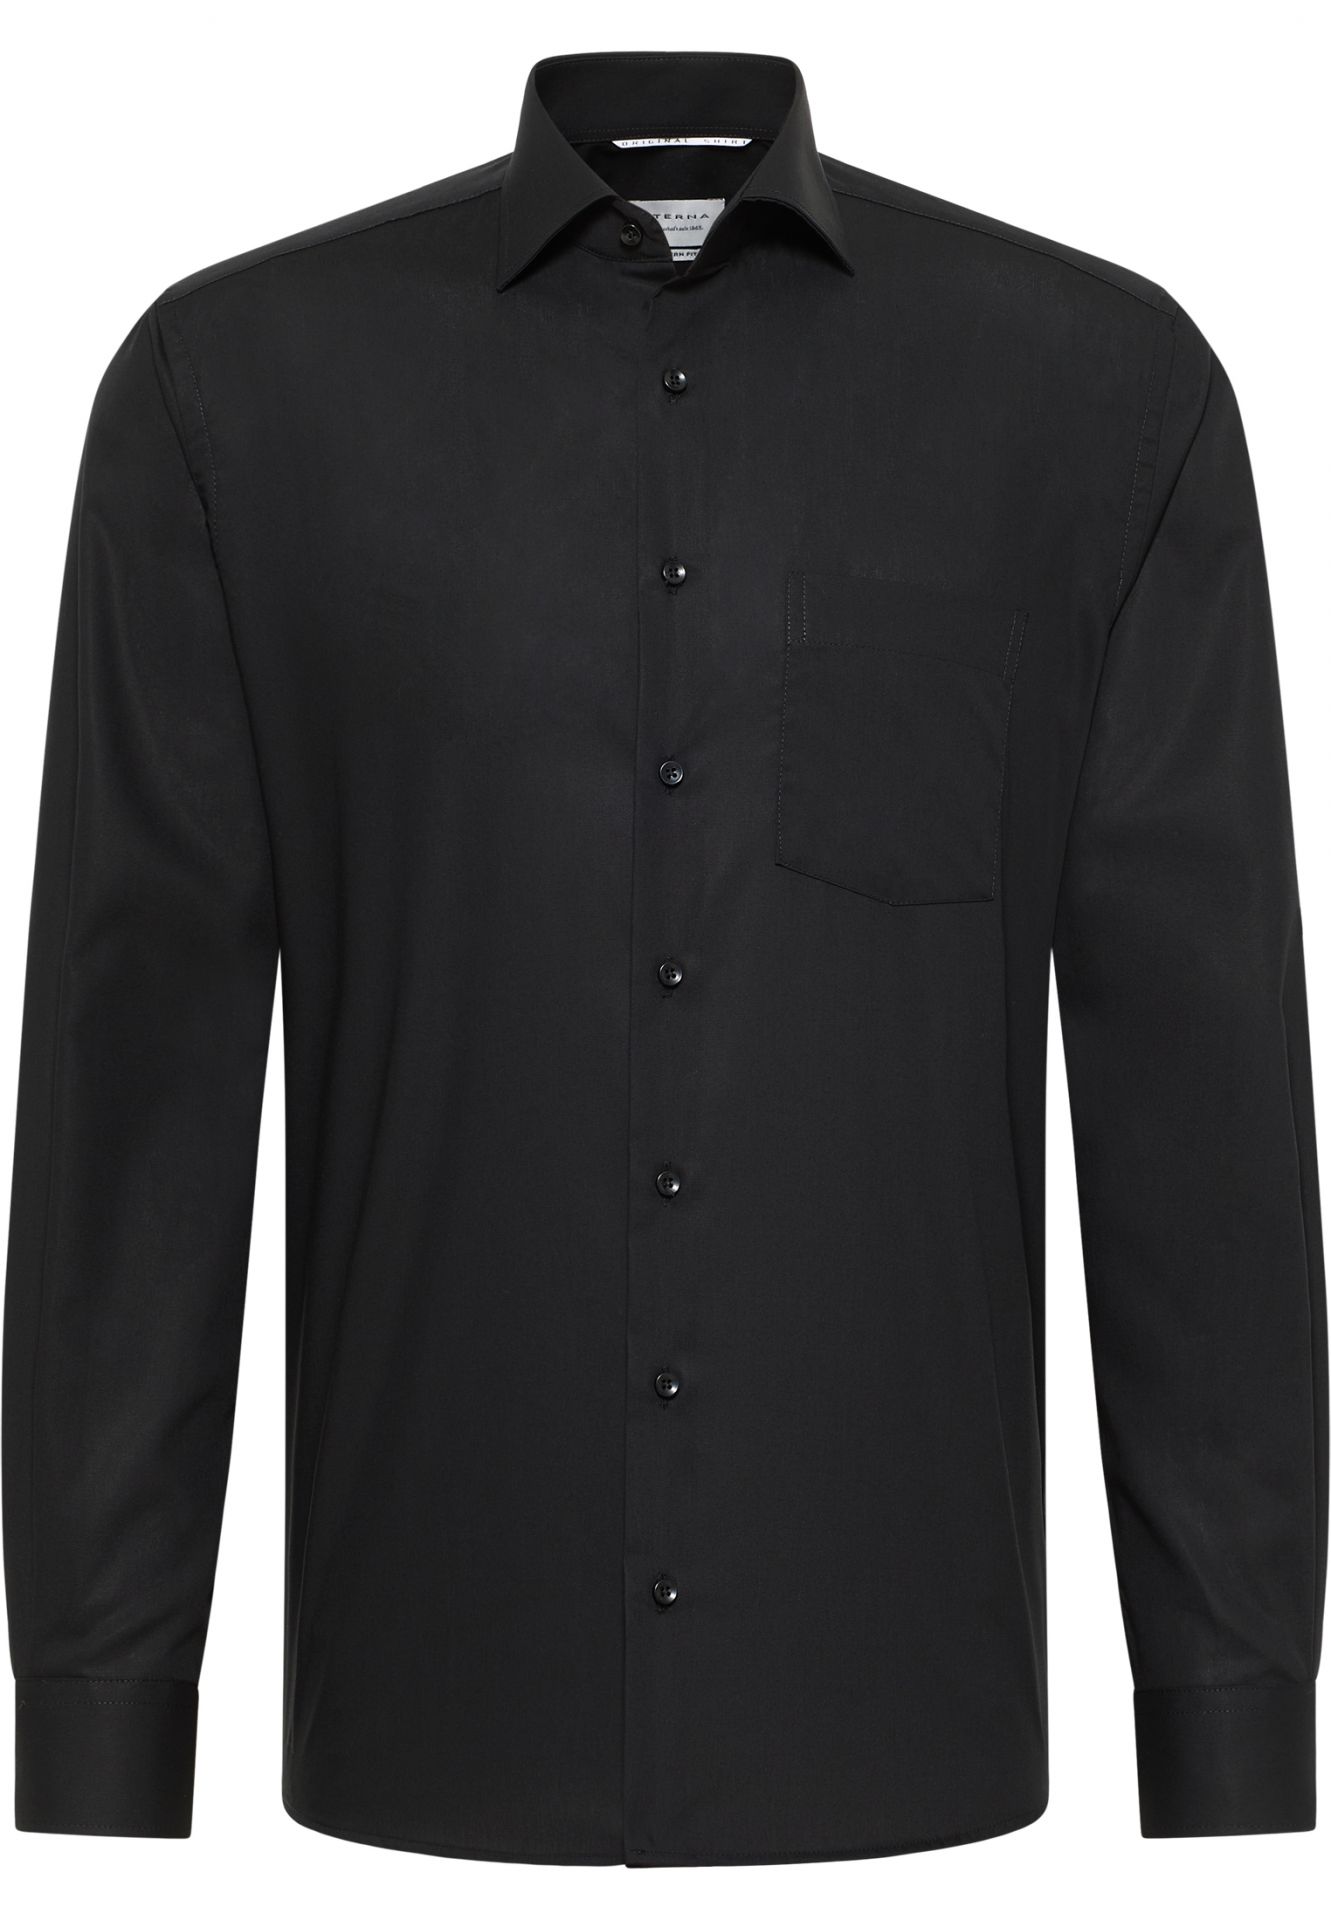 Copy of shirt ORIGINAL SHIRT with breast pocket Modern Fit Eterna®.